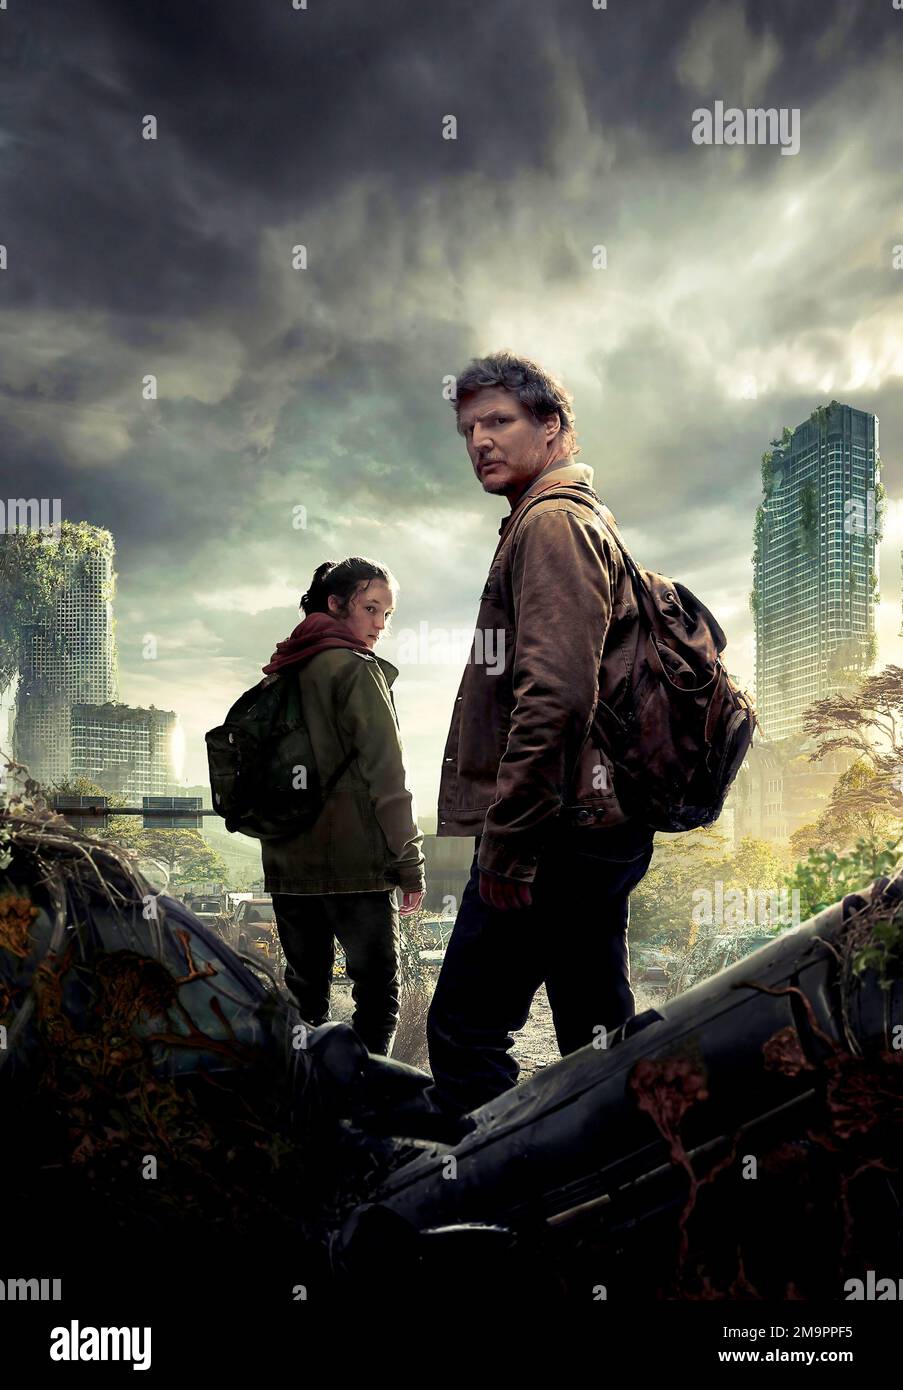 The Last of Us  Pedro Pascal será Joel na série da HBO - Cinema